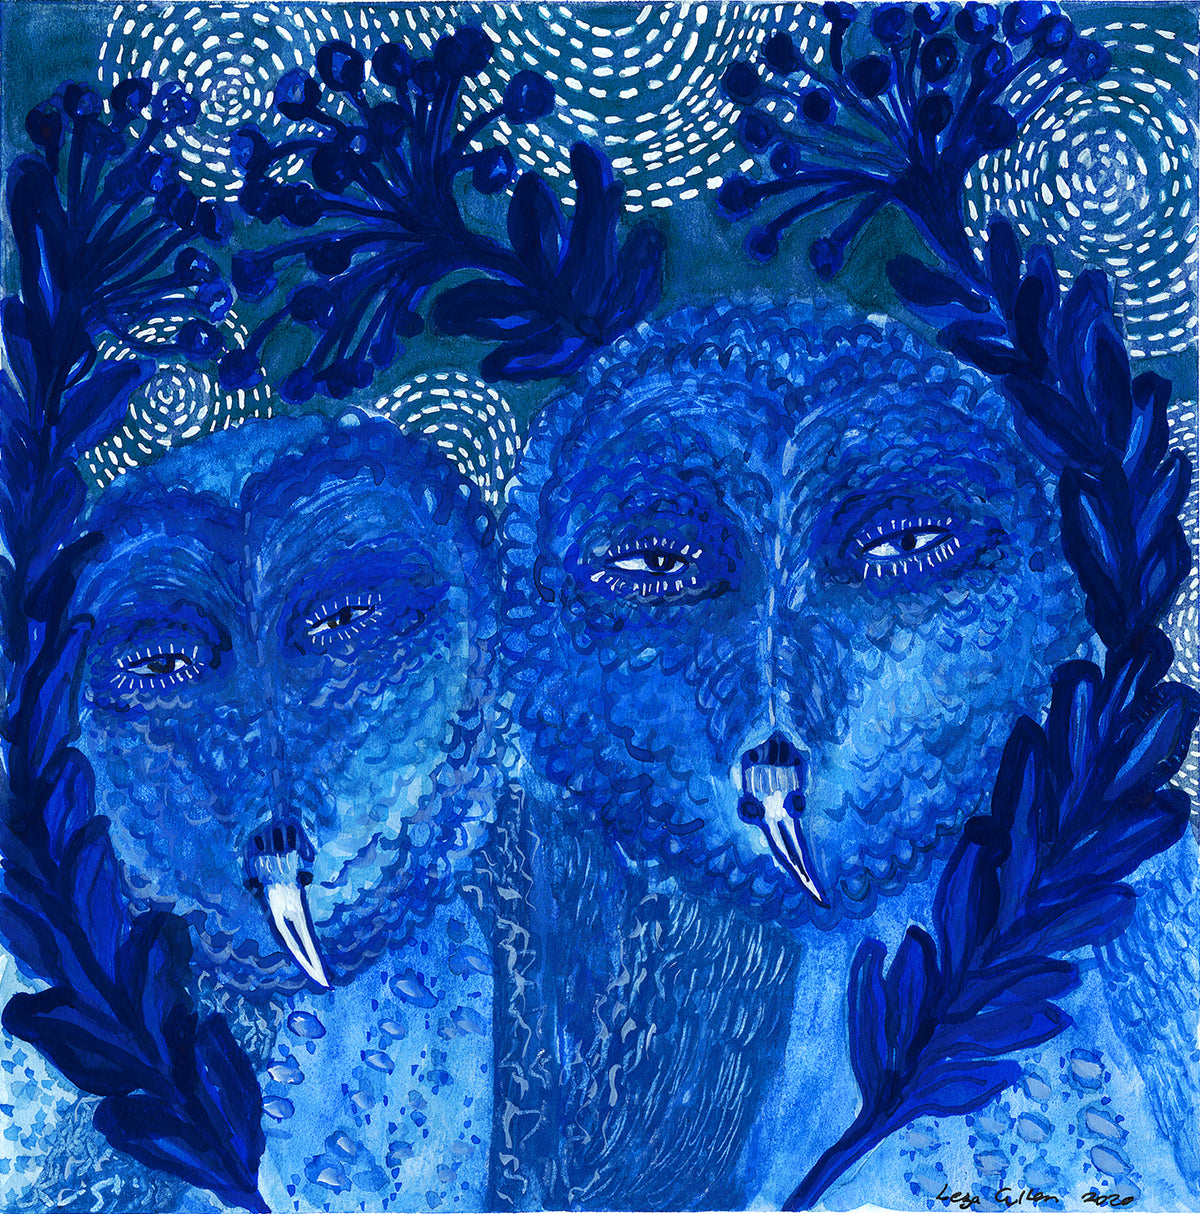 Blue Moon Series - Lovers Wake From Slumber.